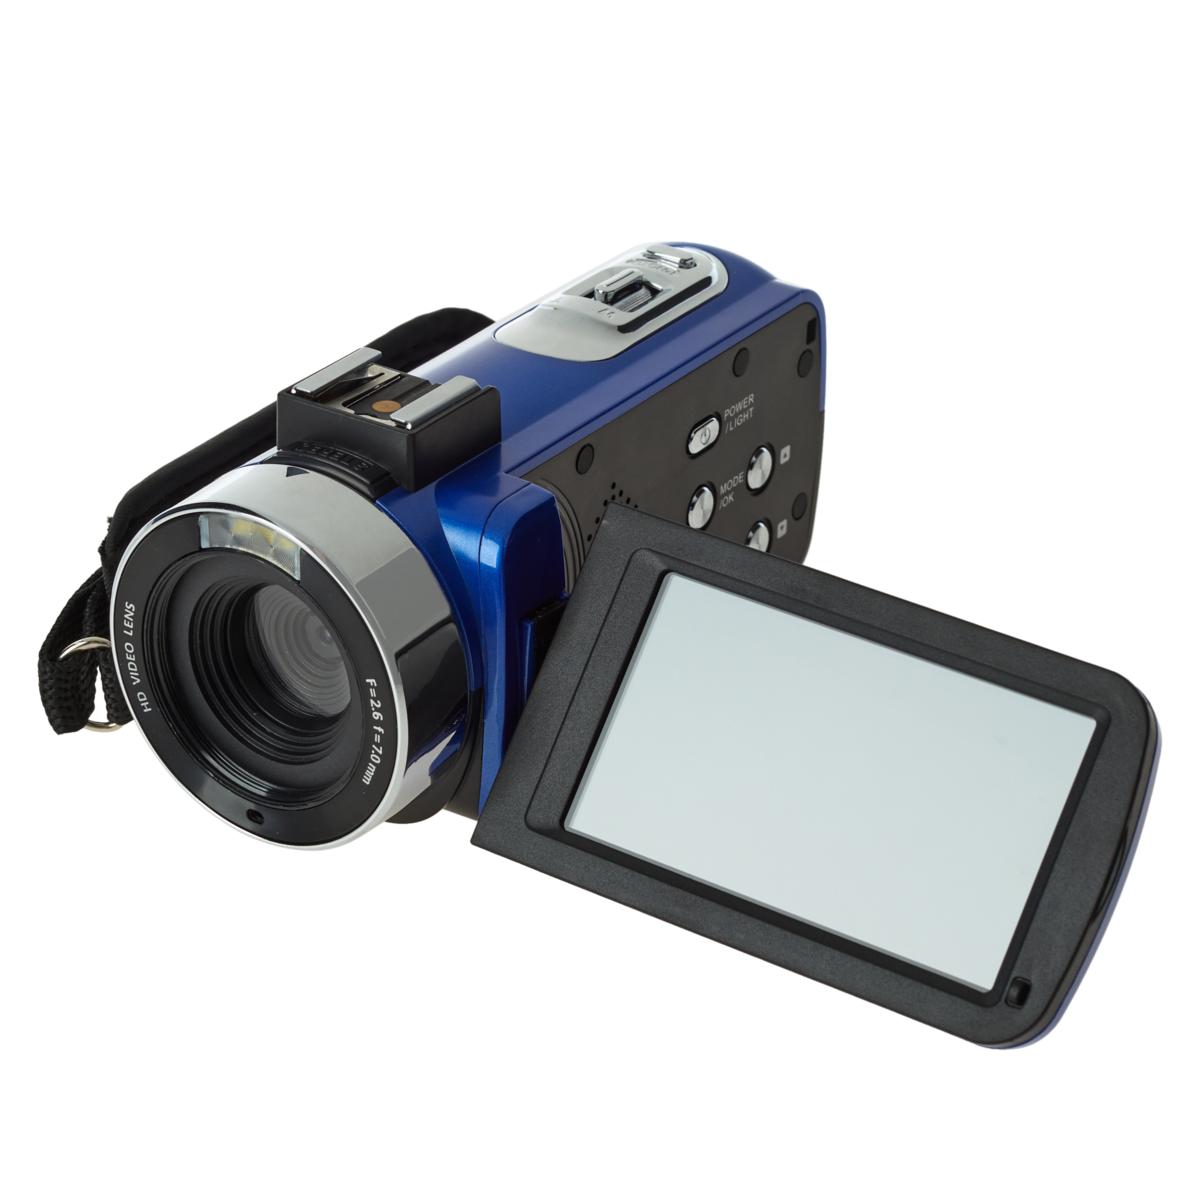 4k-digital-camcorder-id995hd-v1-new-blue-4